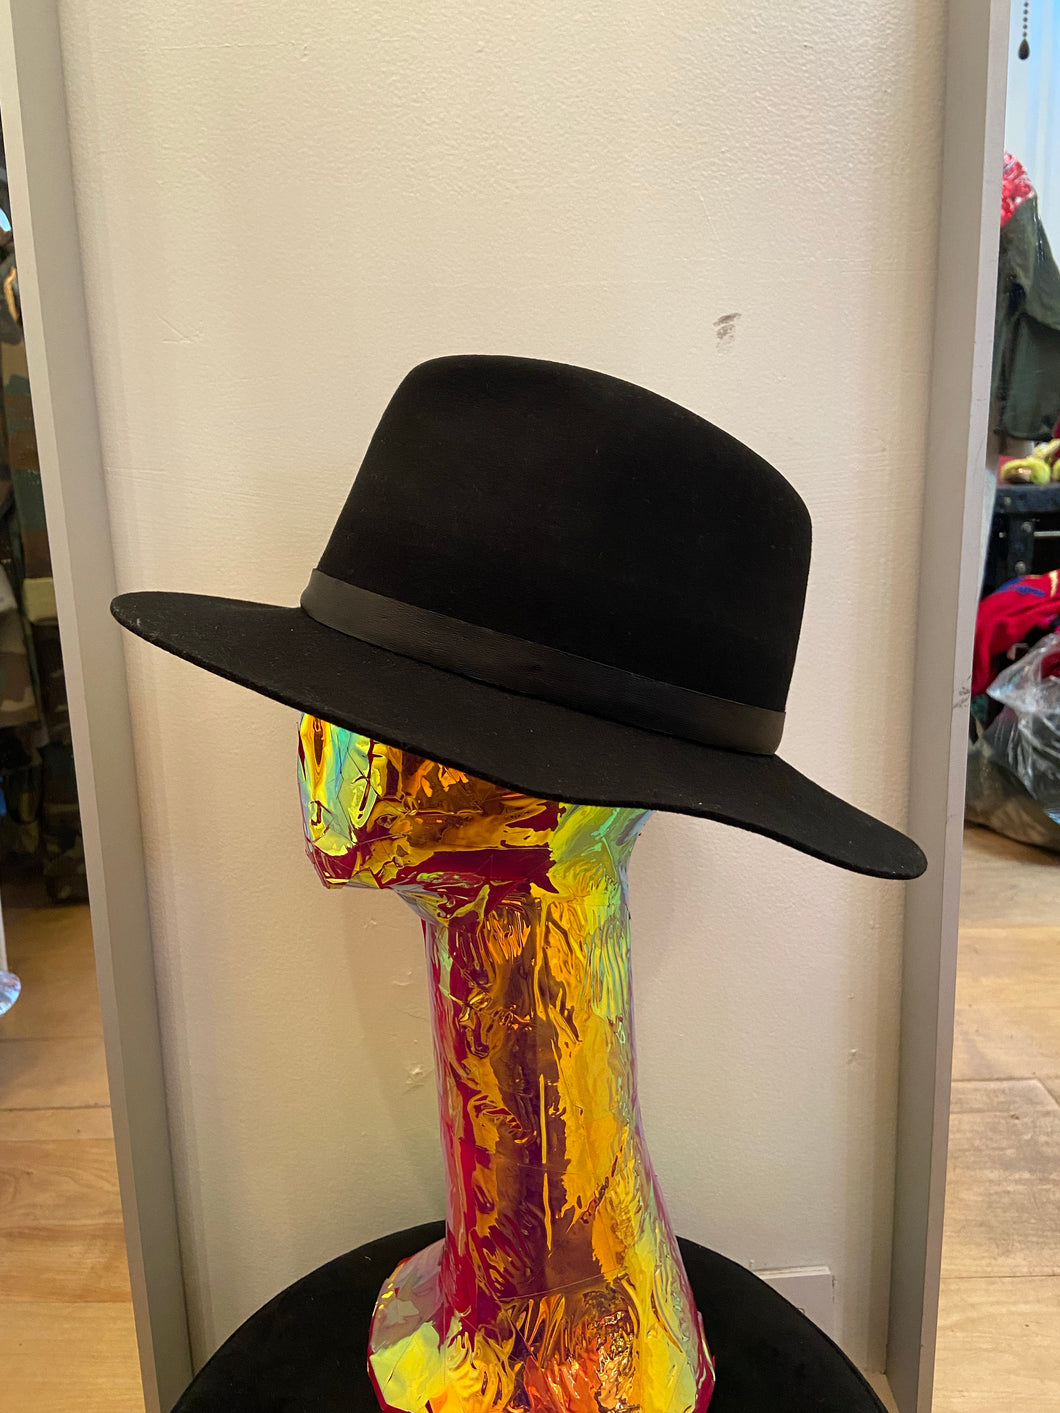 Rene Mantilla black felt Panama hat